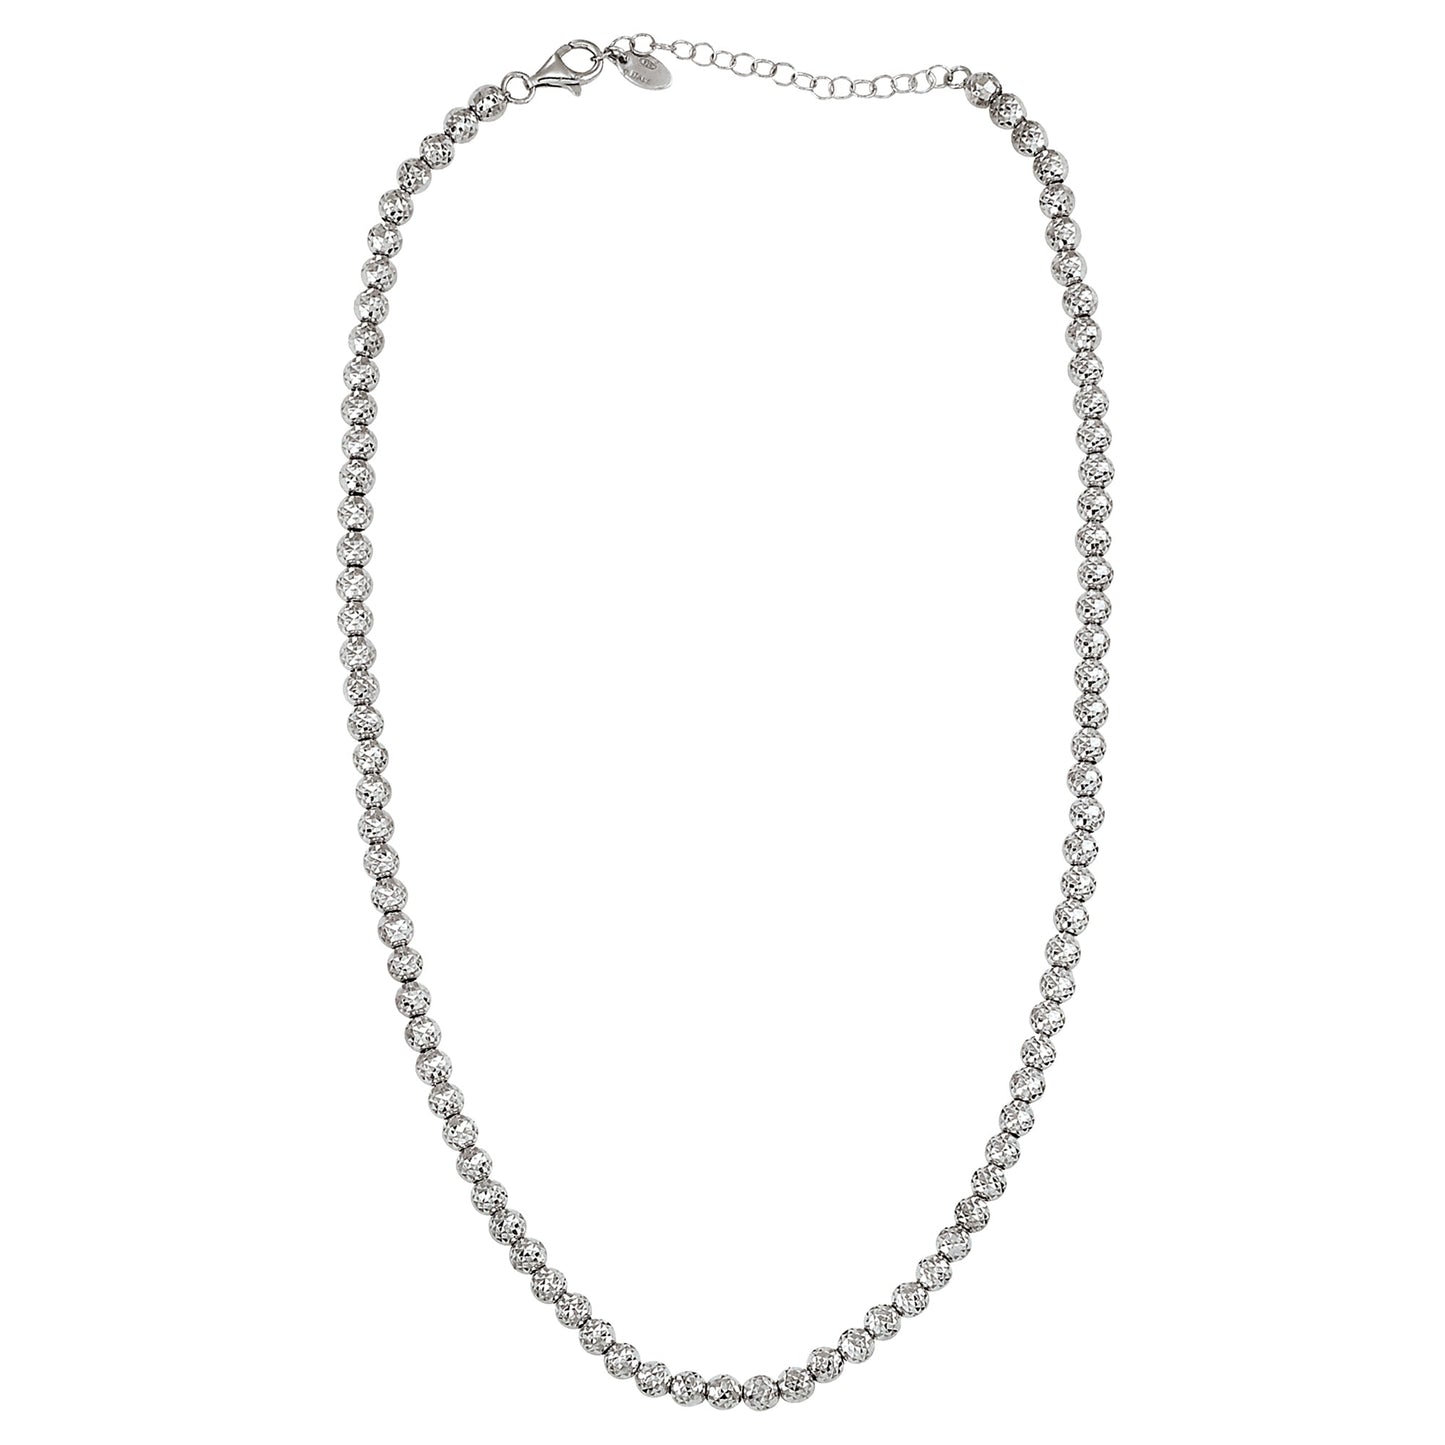 Franco Stellari Italian Sterling Silver Disco Ball Bead Necklace, 16-18" Adj